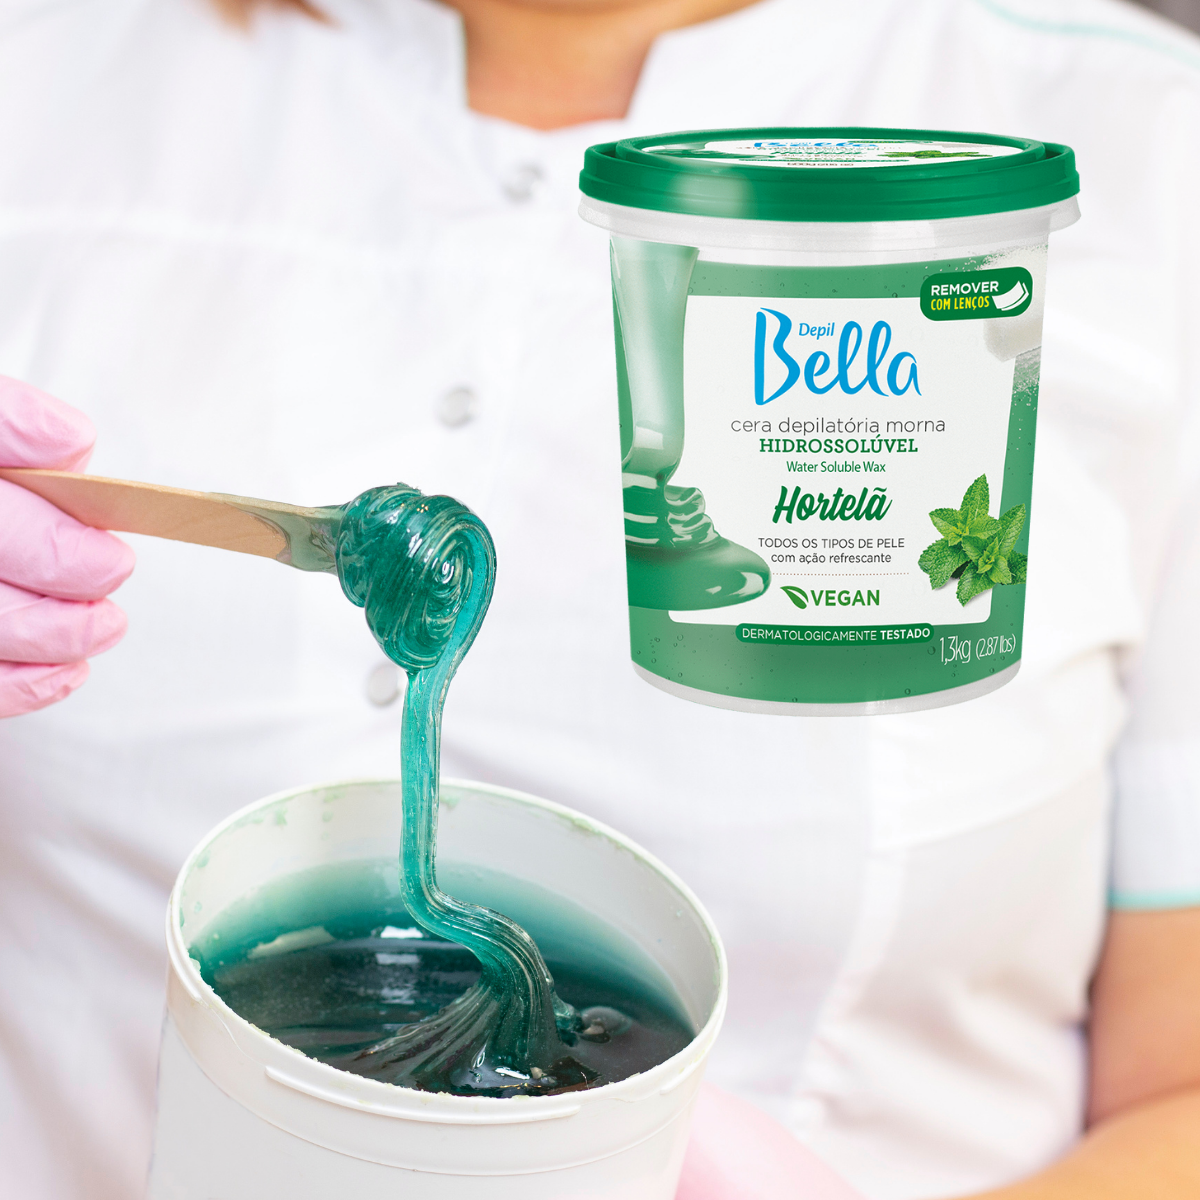 Depil Bella Full Body Sugar Wax Mint, Depiladora 1300g (Oferta 4 Uds) - depilcompany